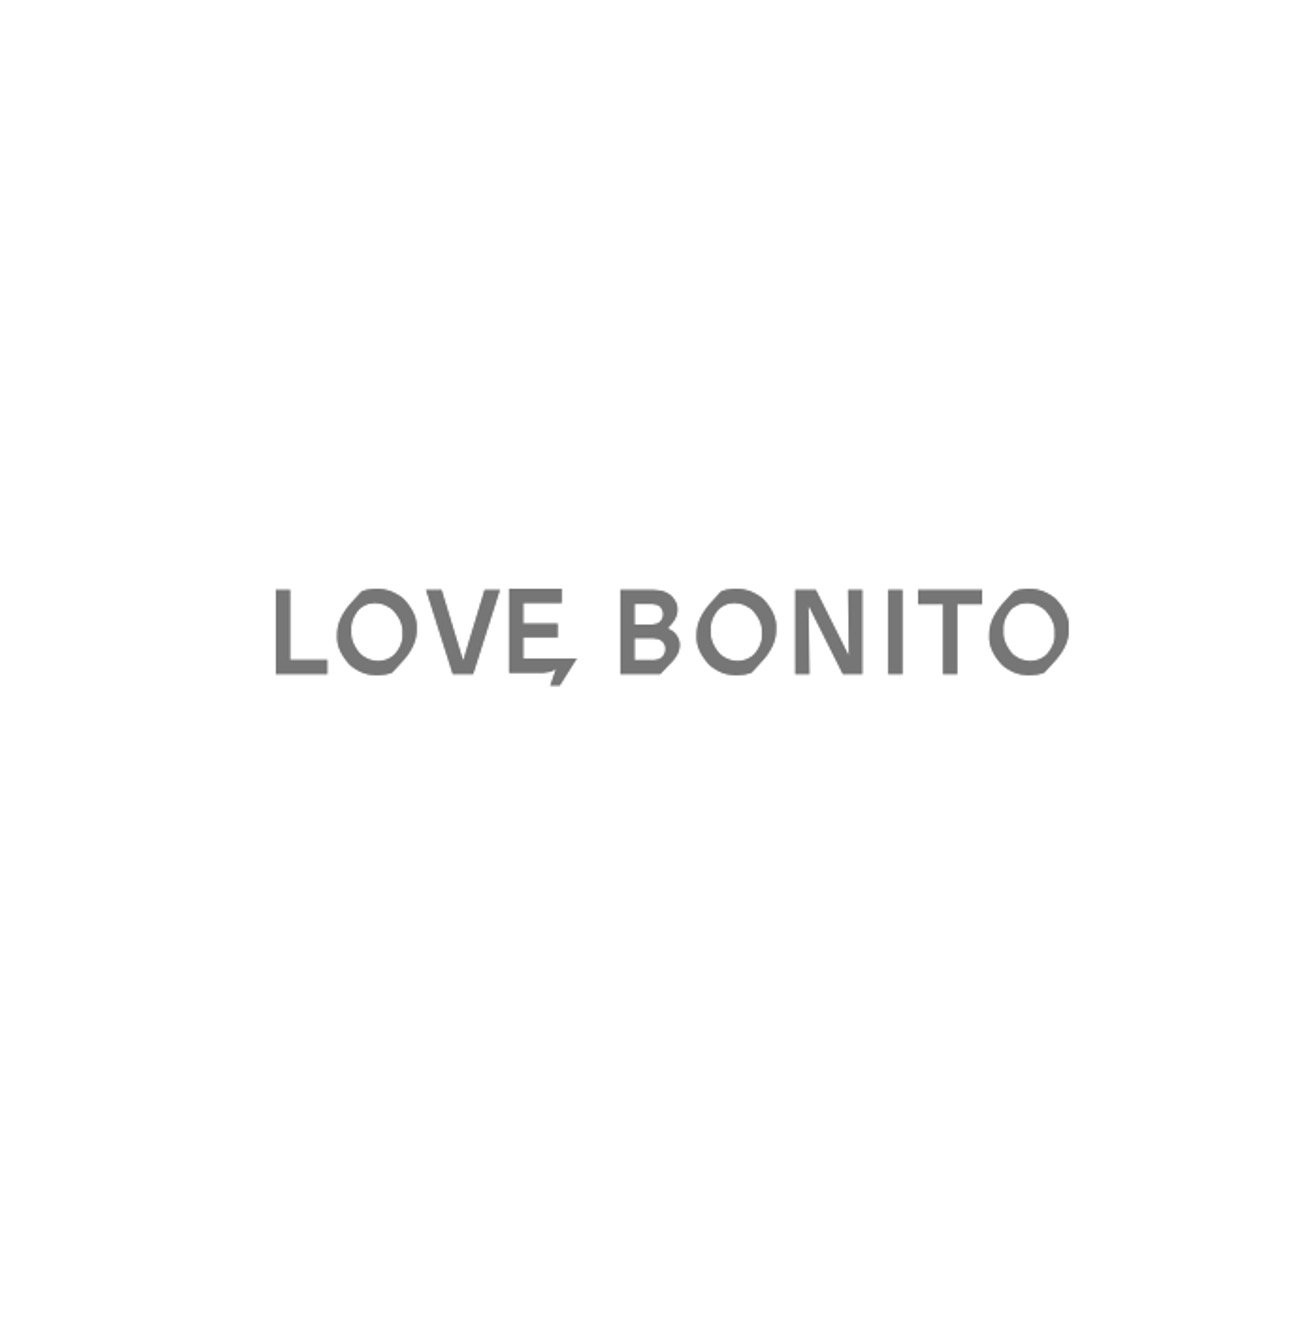 Love Bonito Logo.jpg